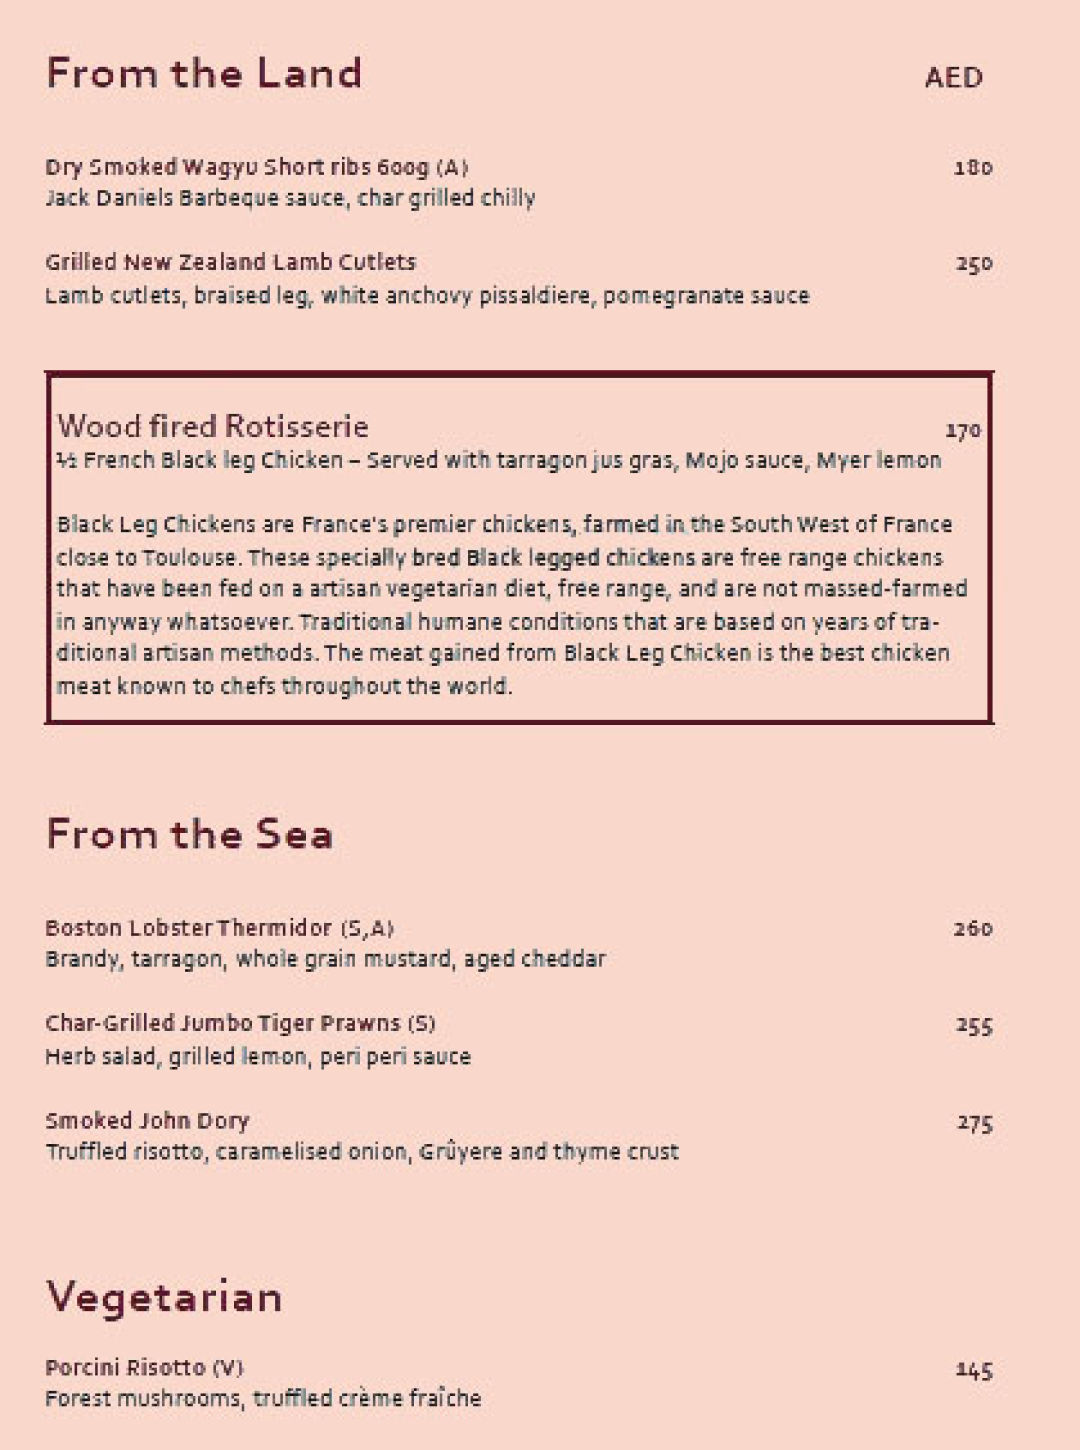 Seafire Steakhouse resturant menu